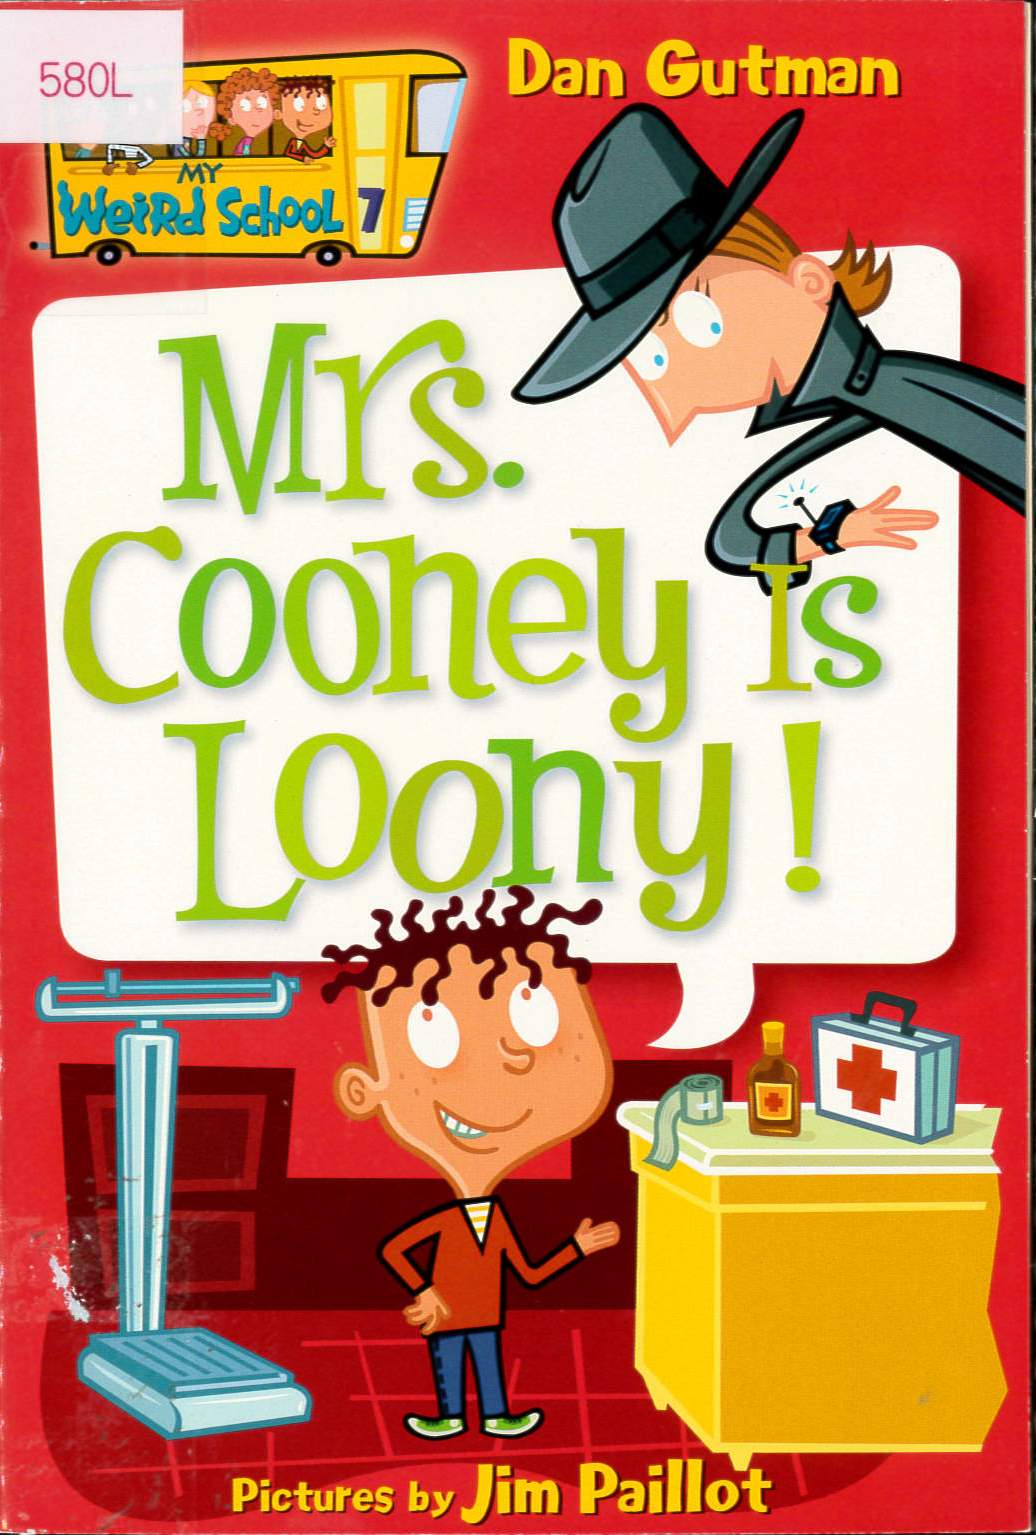 Mrs. Cooney is loony! /